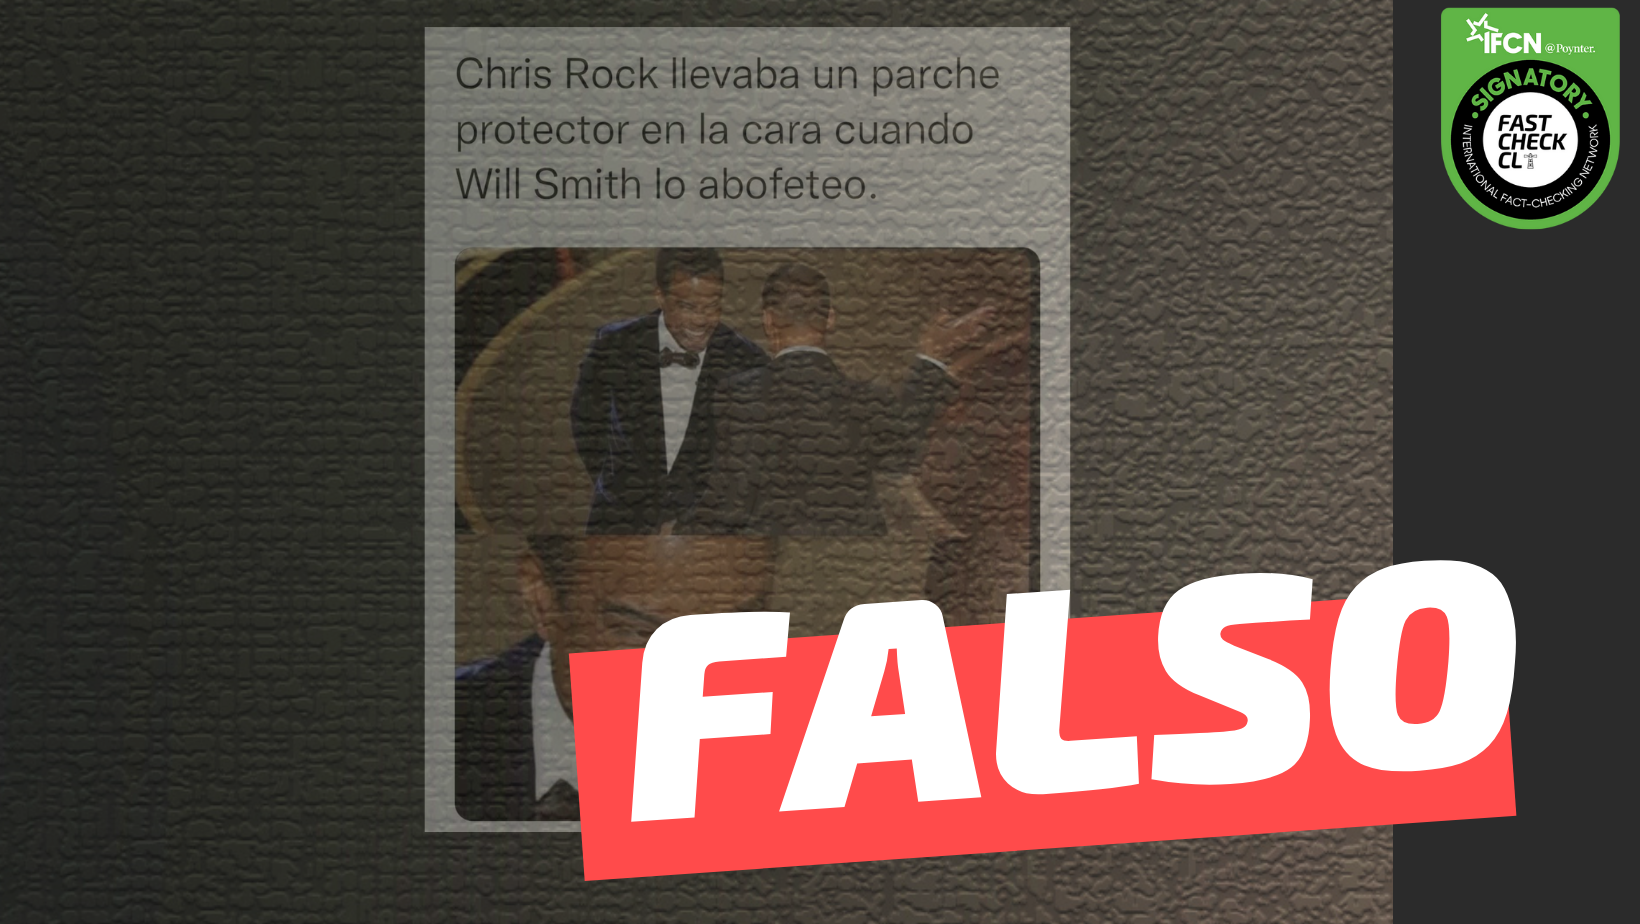 Read more about the article (Imagen) “Chris Rock llevaba un parche protector cuando Will Smith lo abofeteó”: #Falso